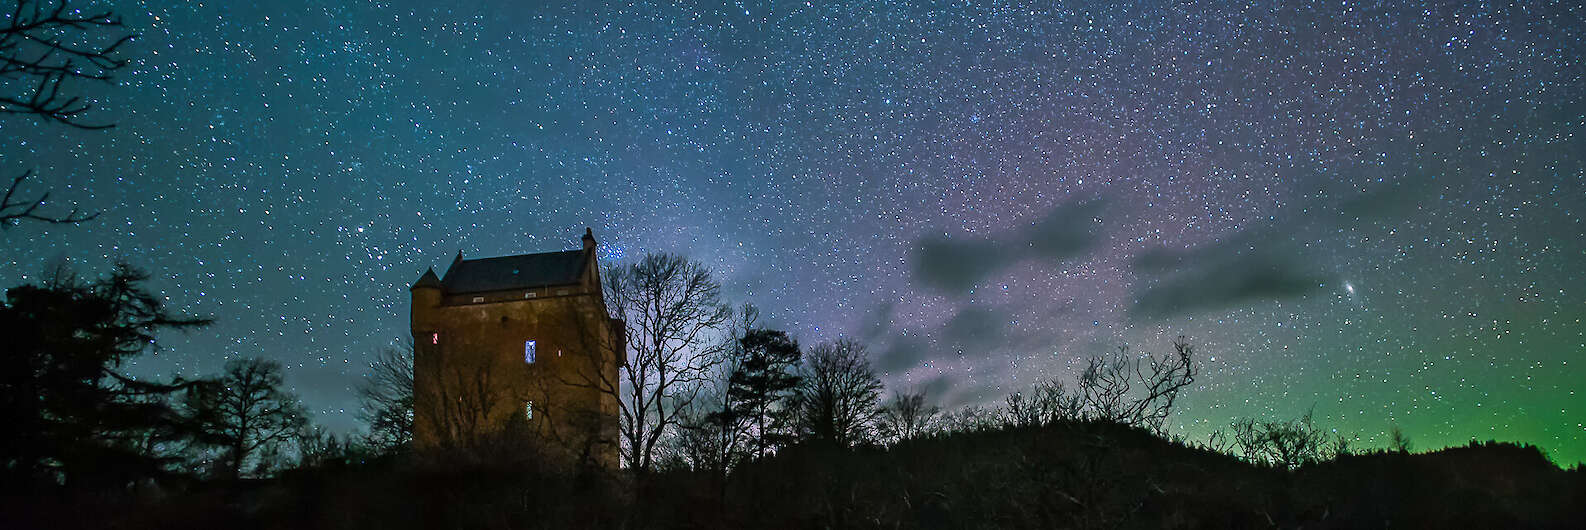 Kinlochaline Castle under the stars | Courtesy of Steven Marshall Photography - www.smarshall-photography.com